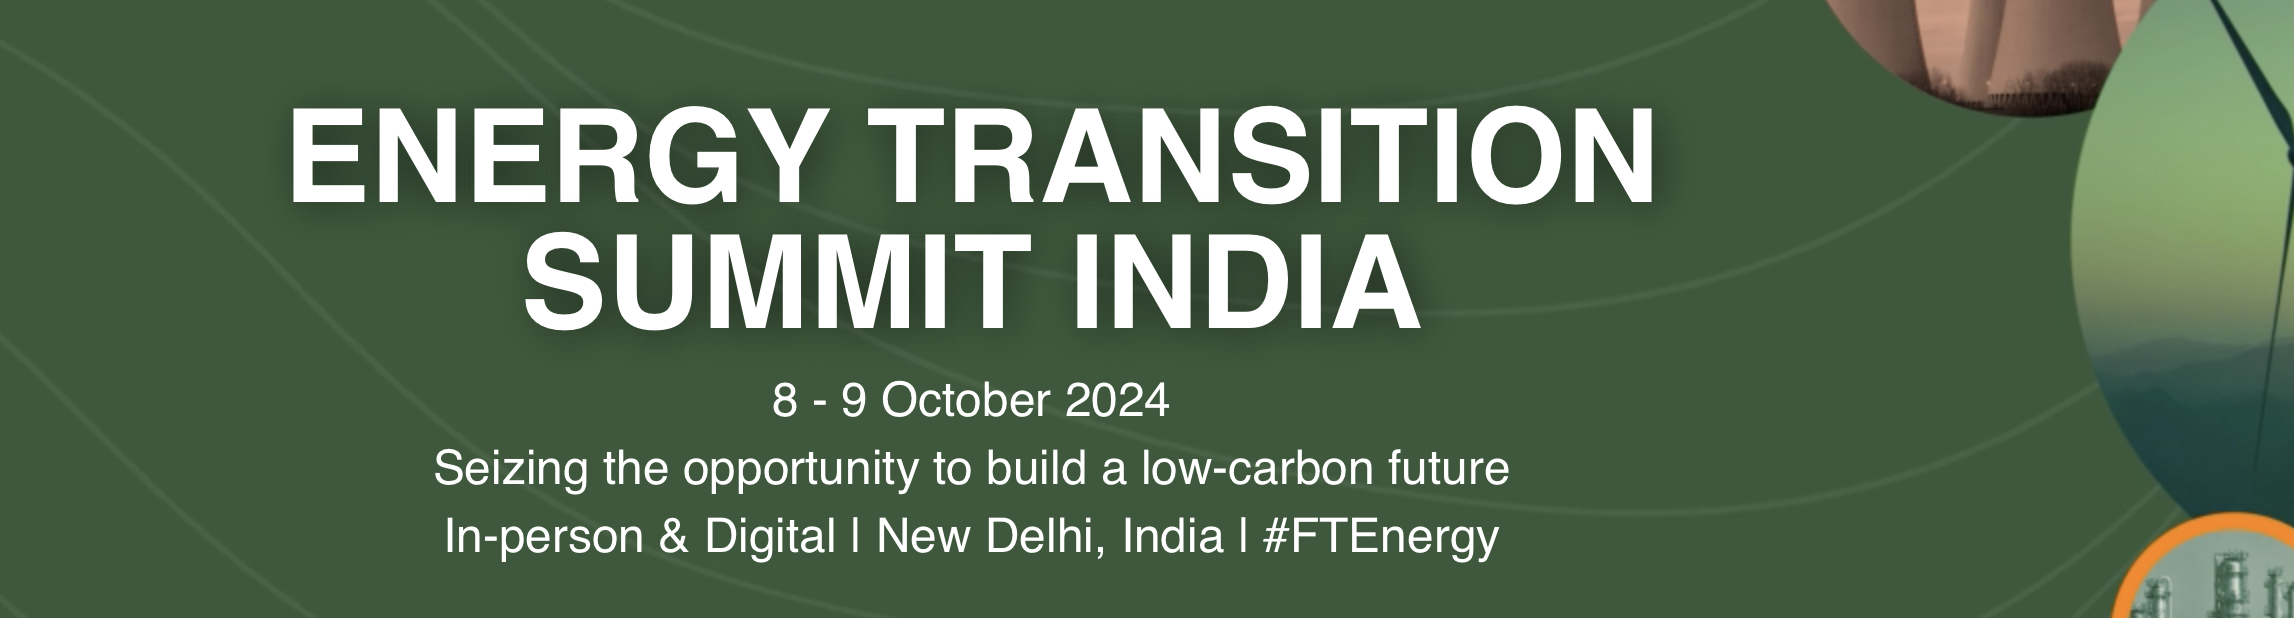 Energy Transition Summit India 2024